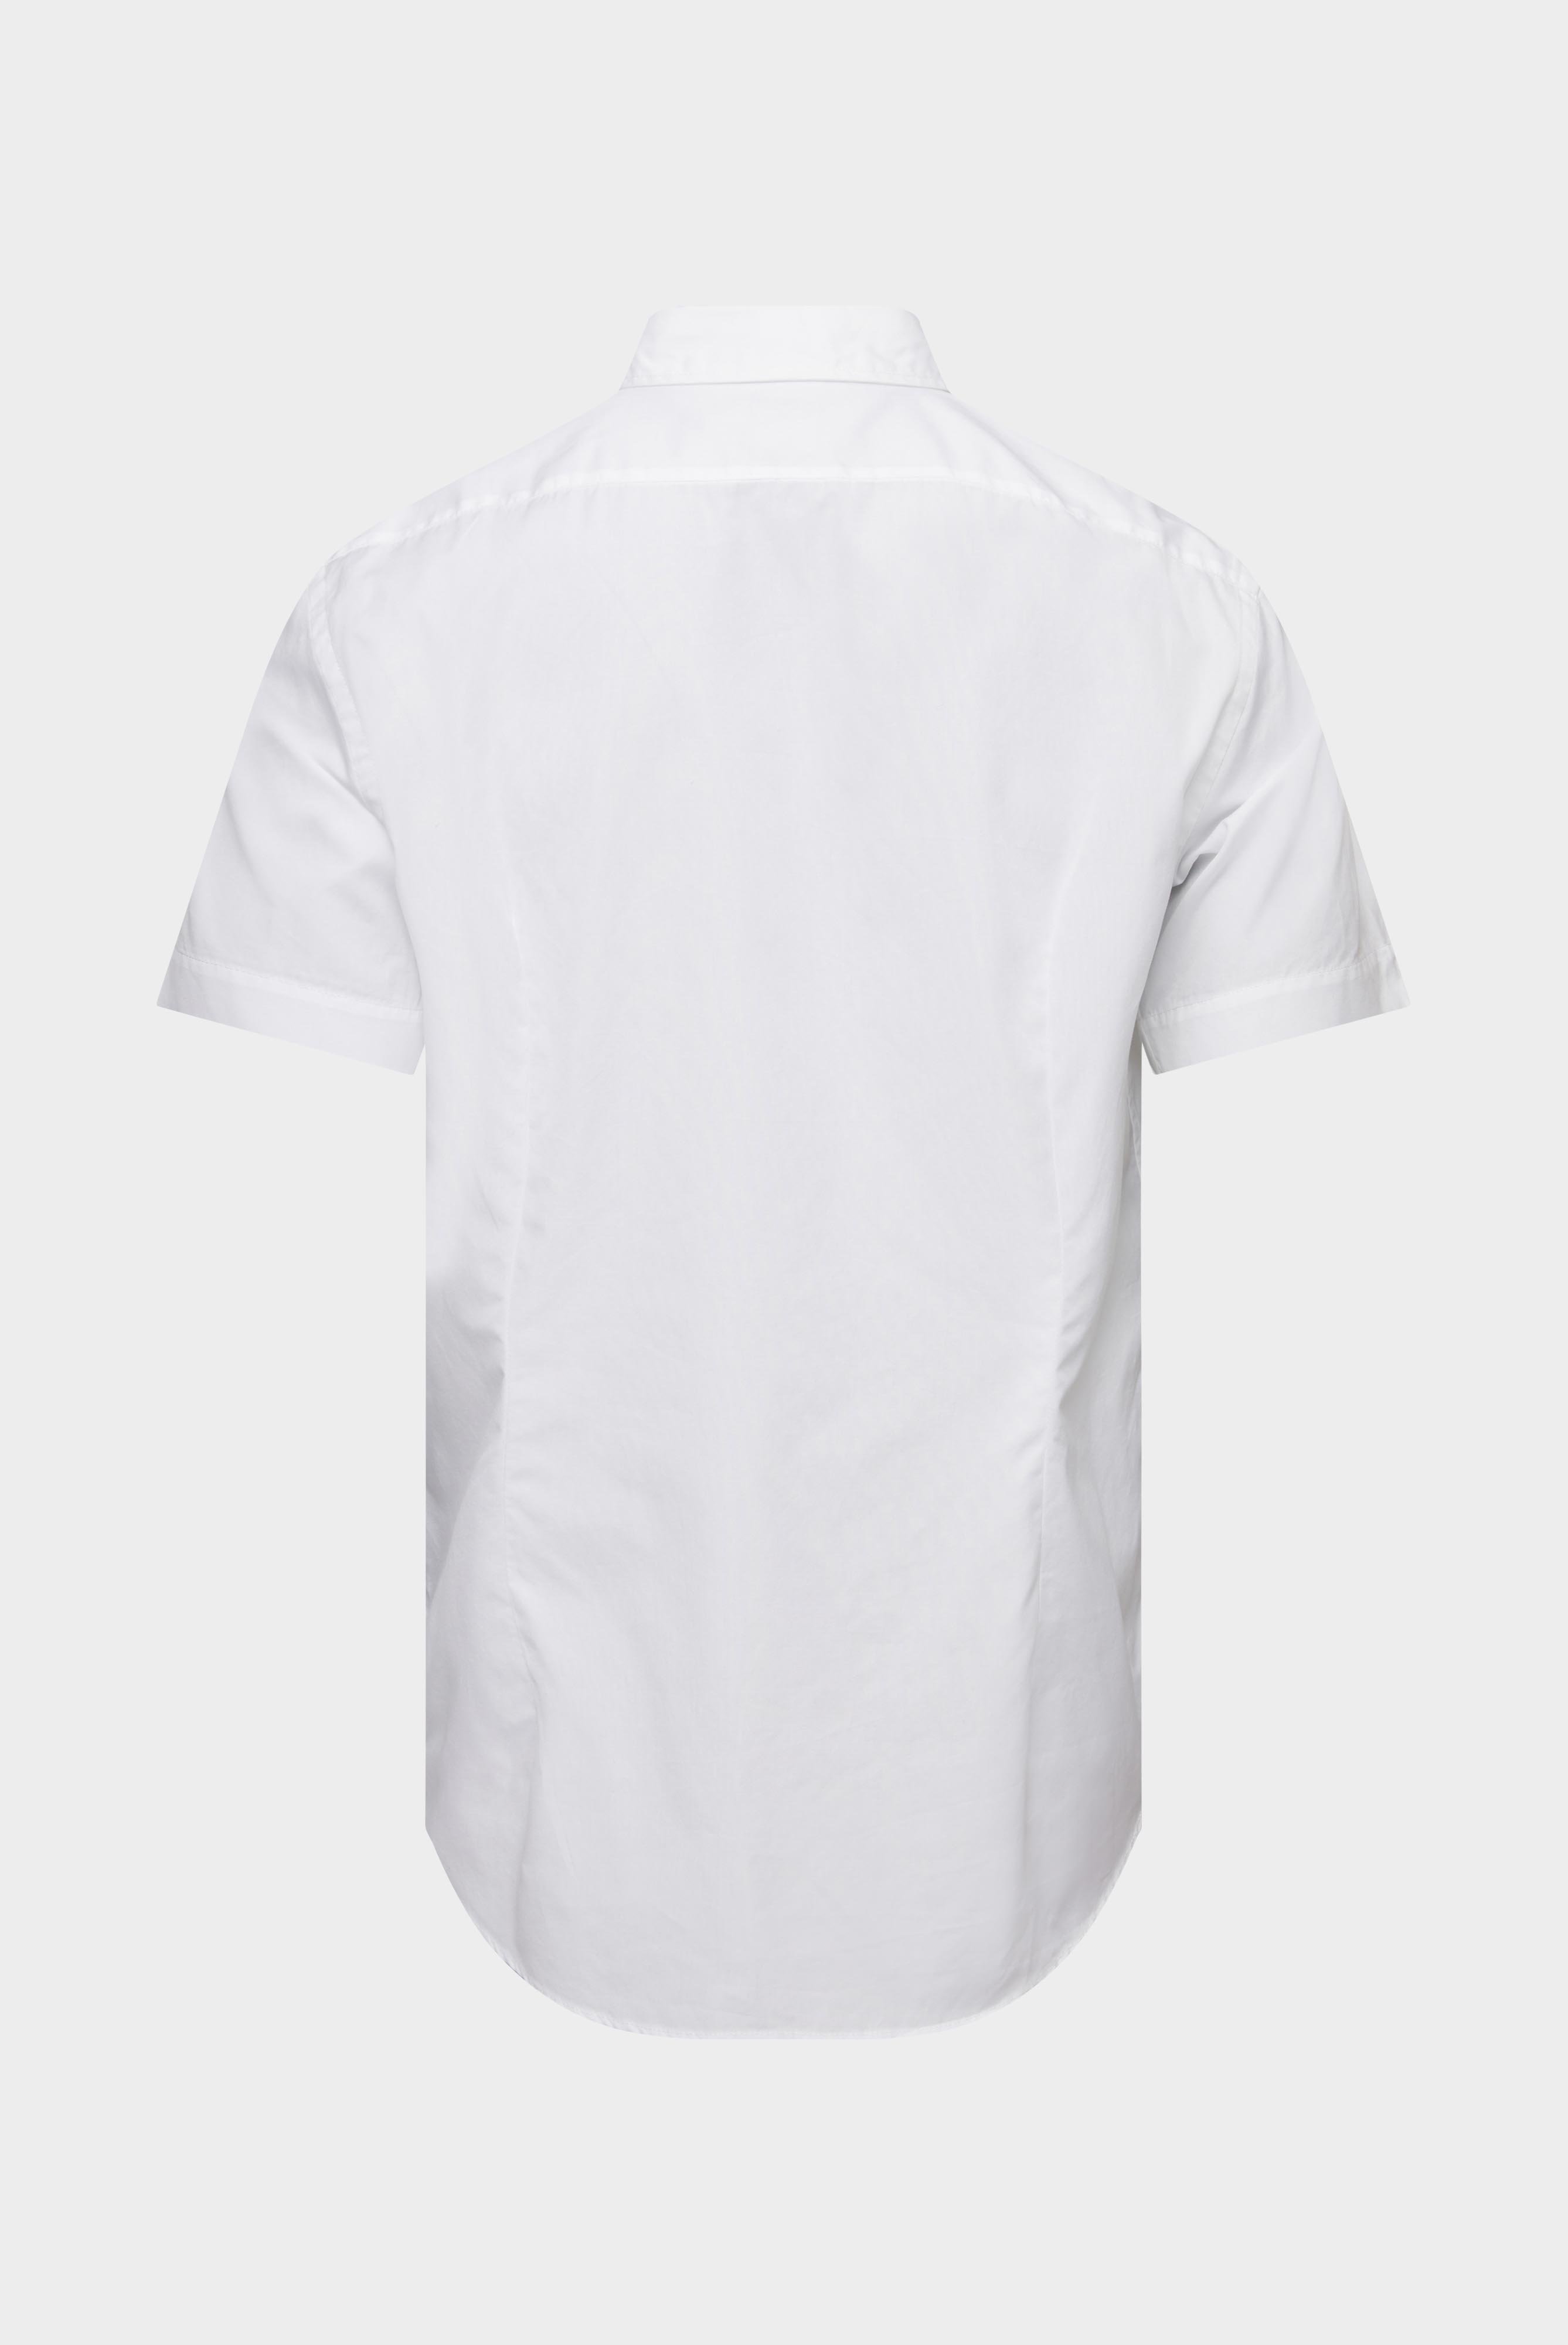 Kurzarm Hemden+Kurzärmliges Hemd aus Baumwollpopeline+20.2053.Q2.130648.000.38